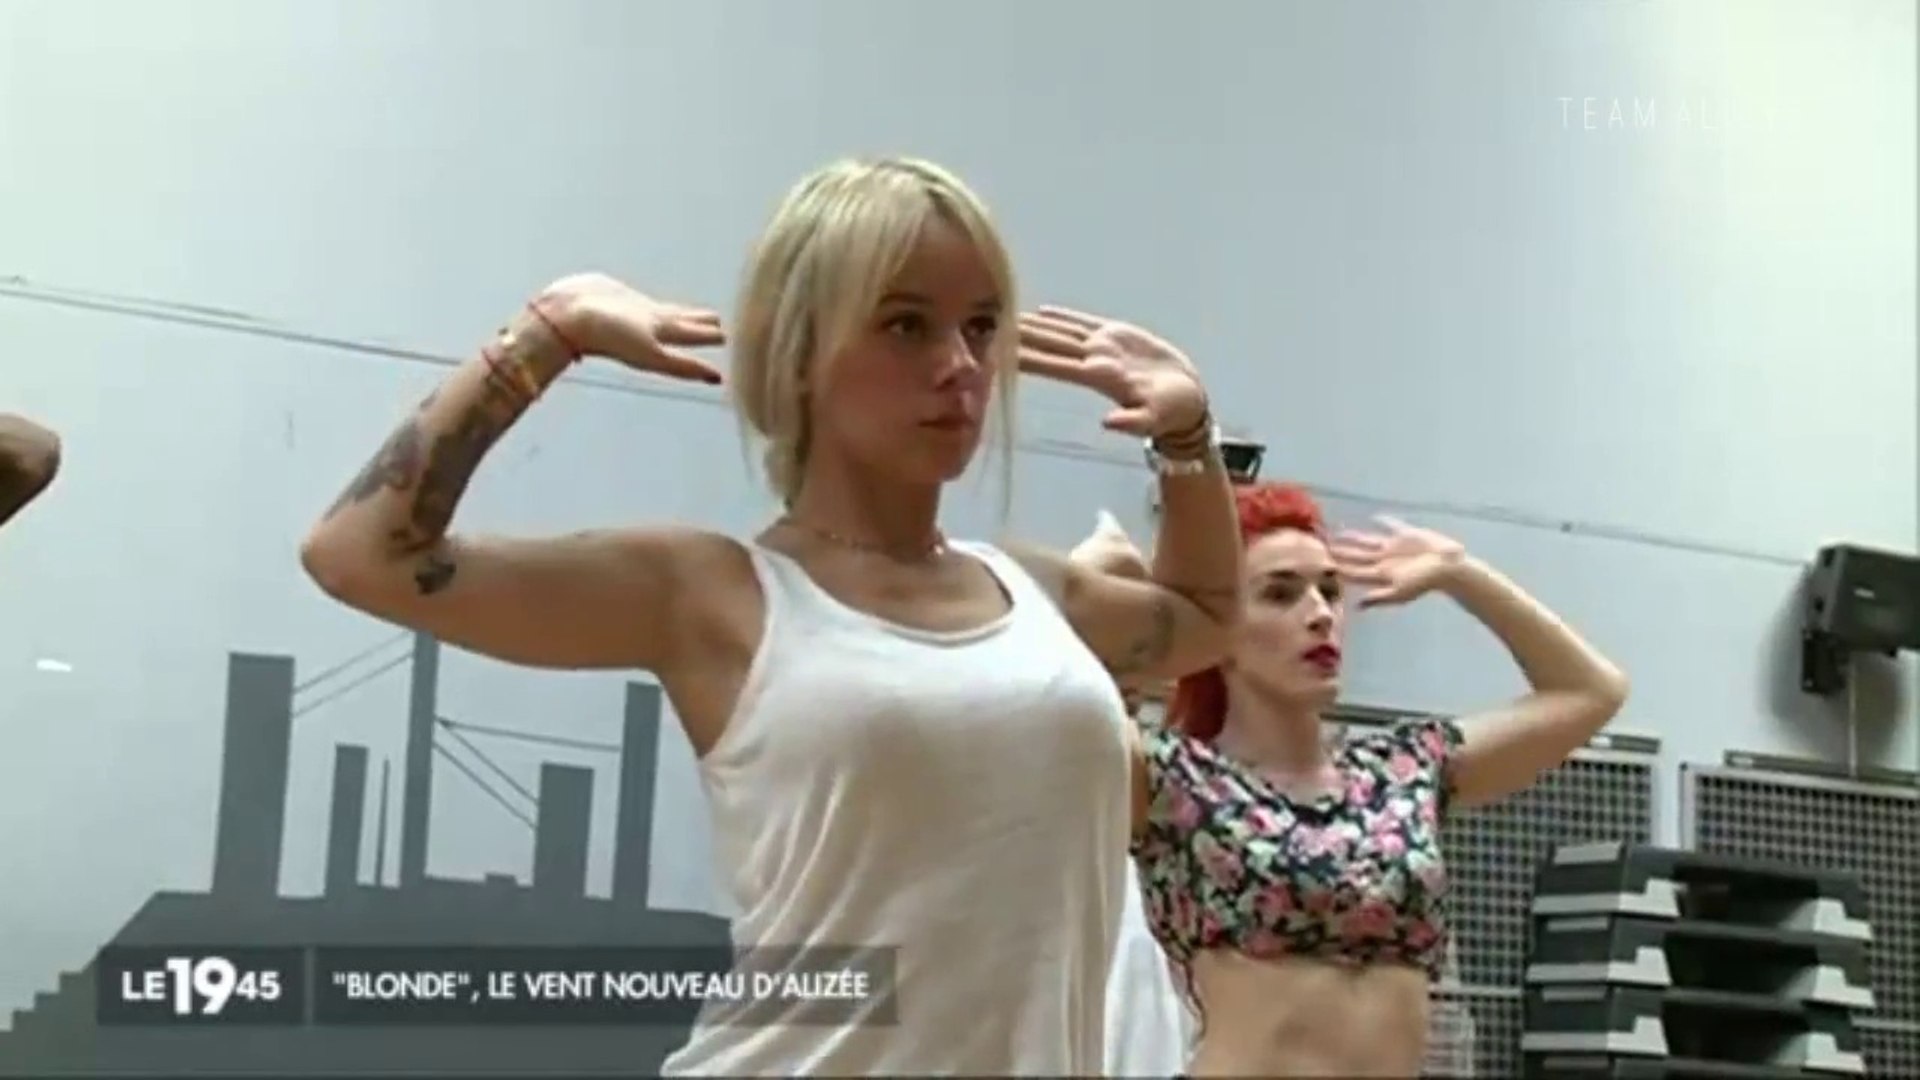 HD] Alizée "Blonde" Le_19.45 - Vidéo Dailymotion